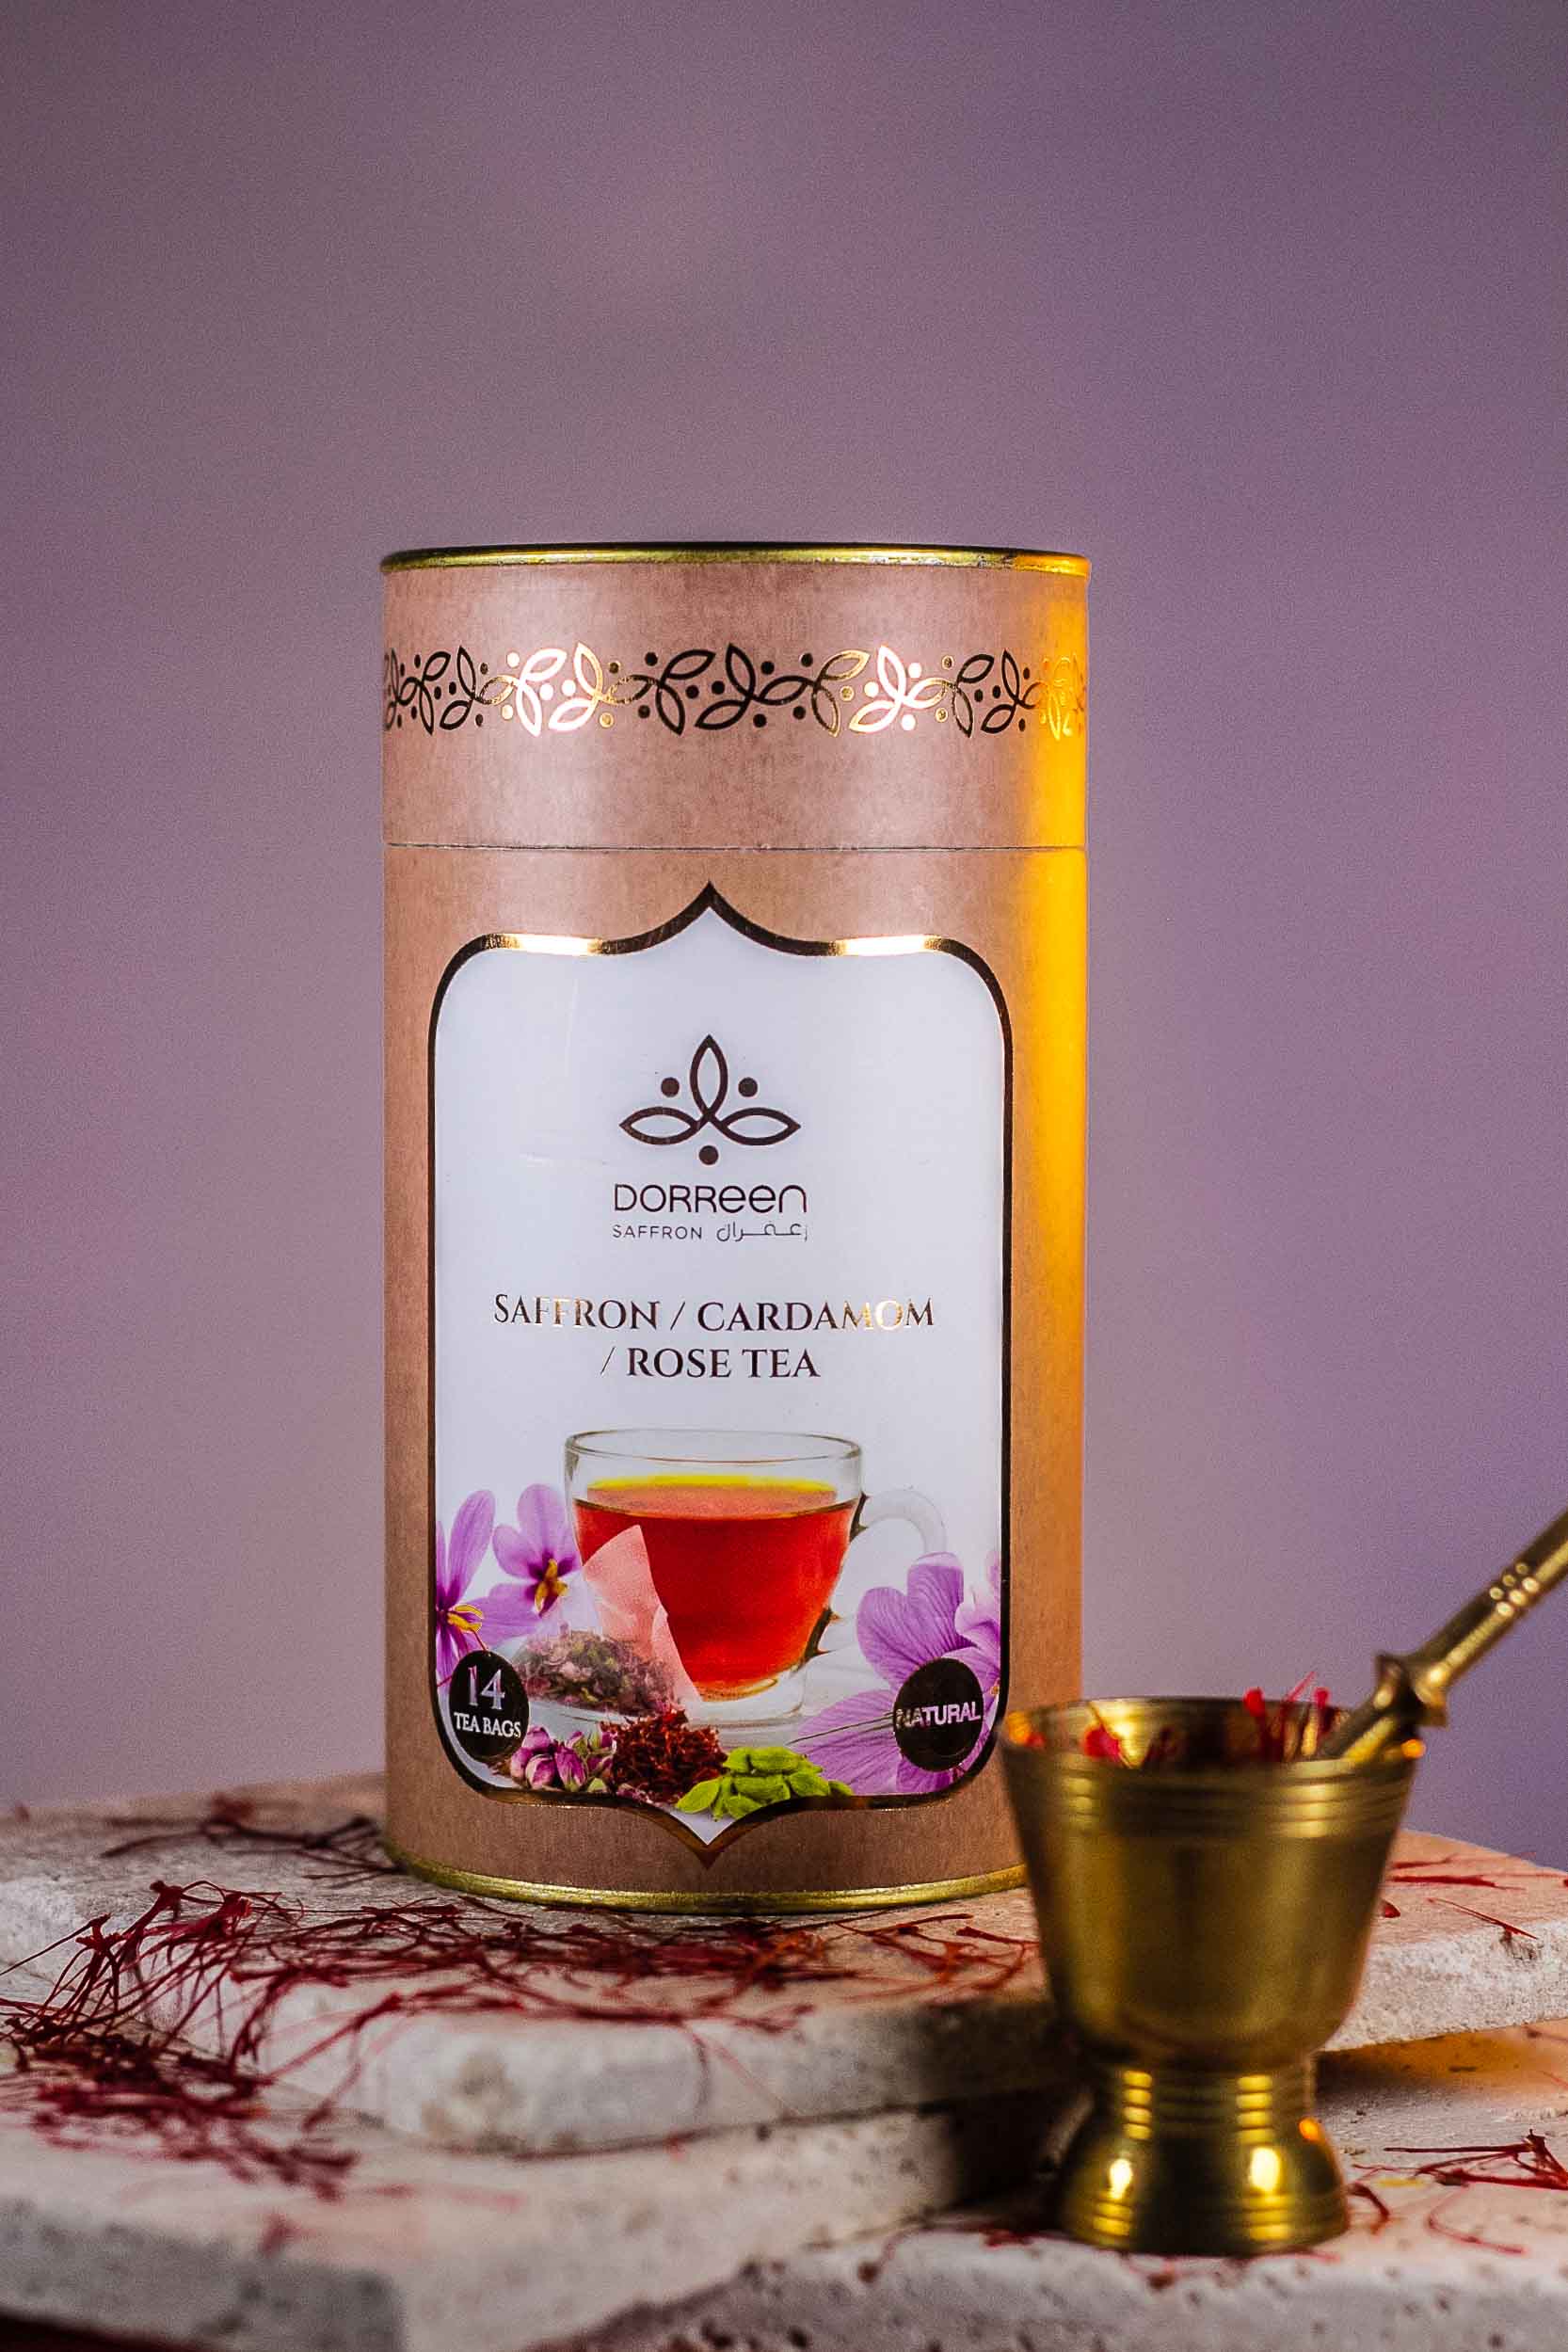 Saffron, Cardamom Rose Tea Box